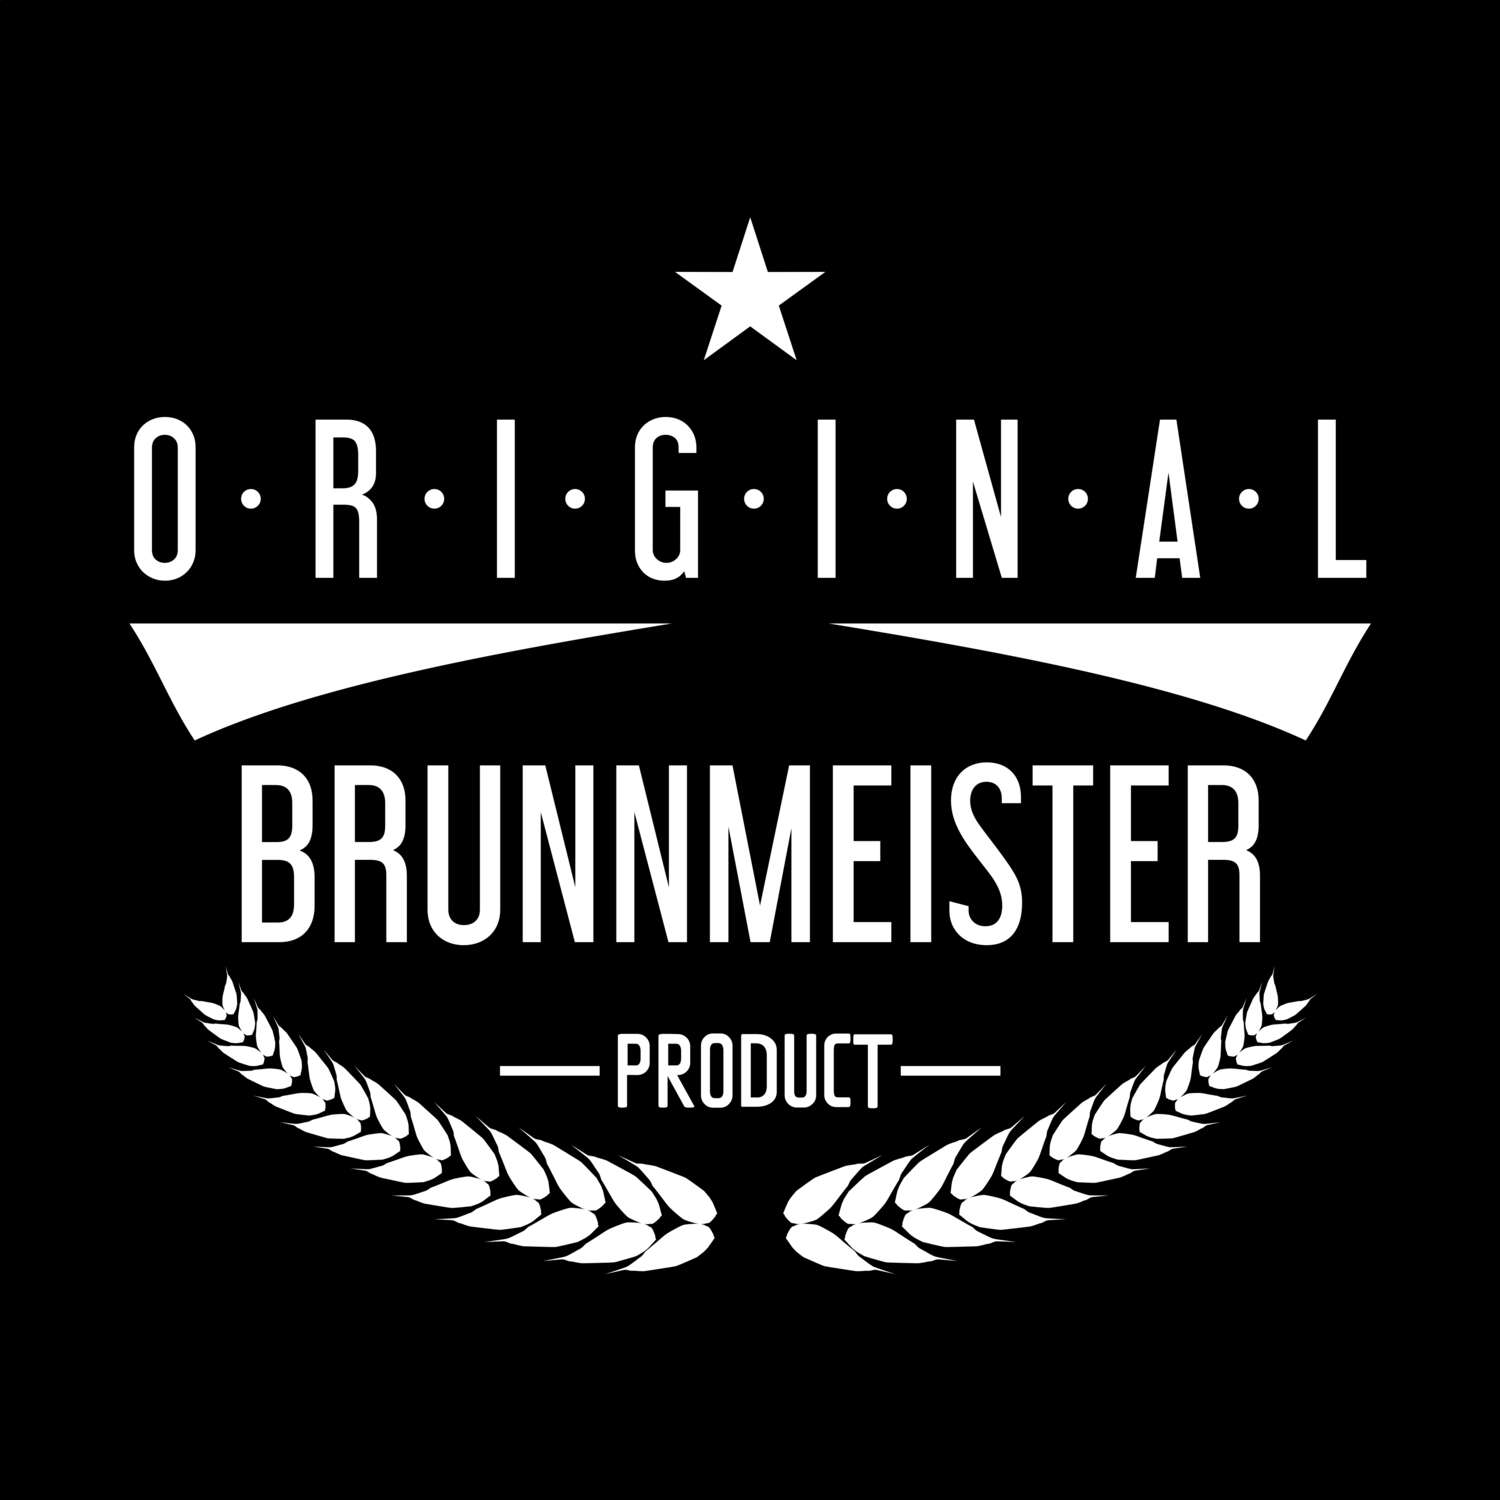 Brunnmeister T-Shirt »Original Product«